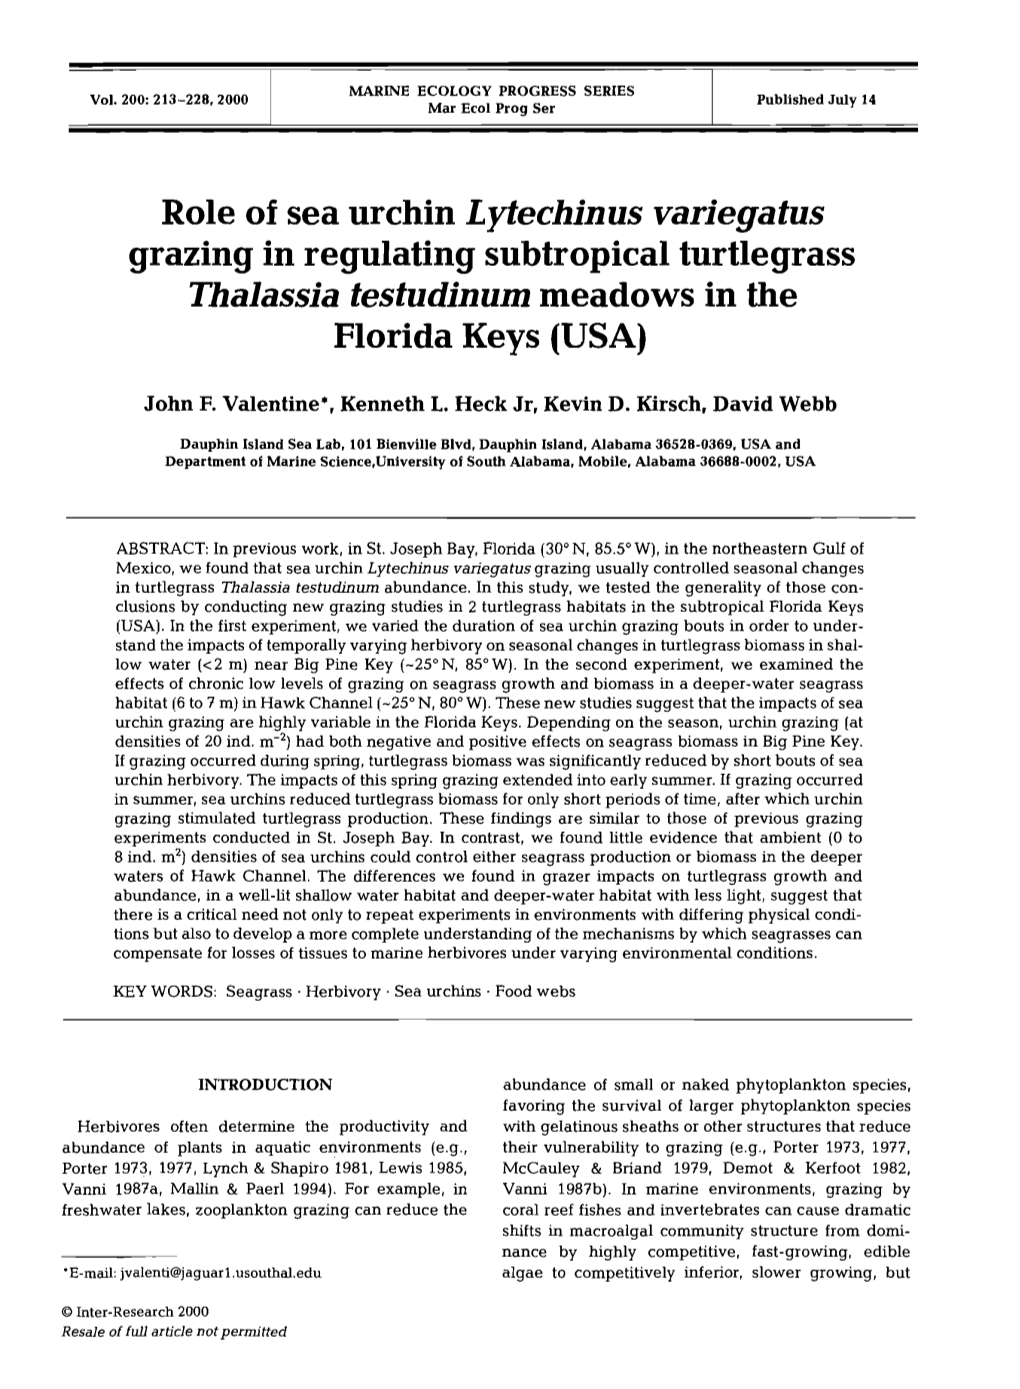 Role of Sea Urchin Lytechinus Variegatus Thalassia Testudinum